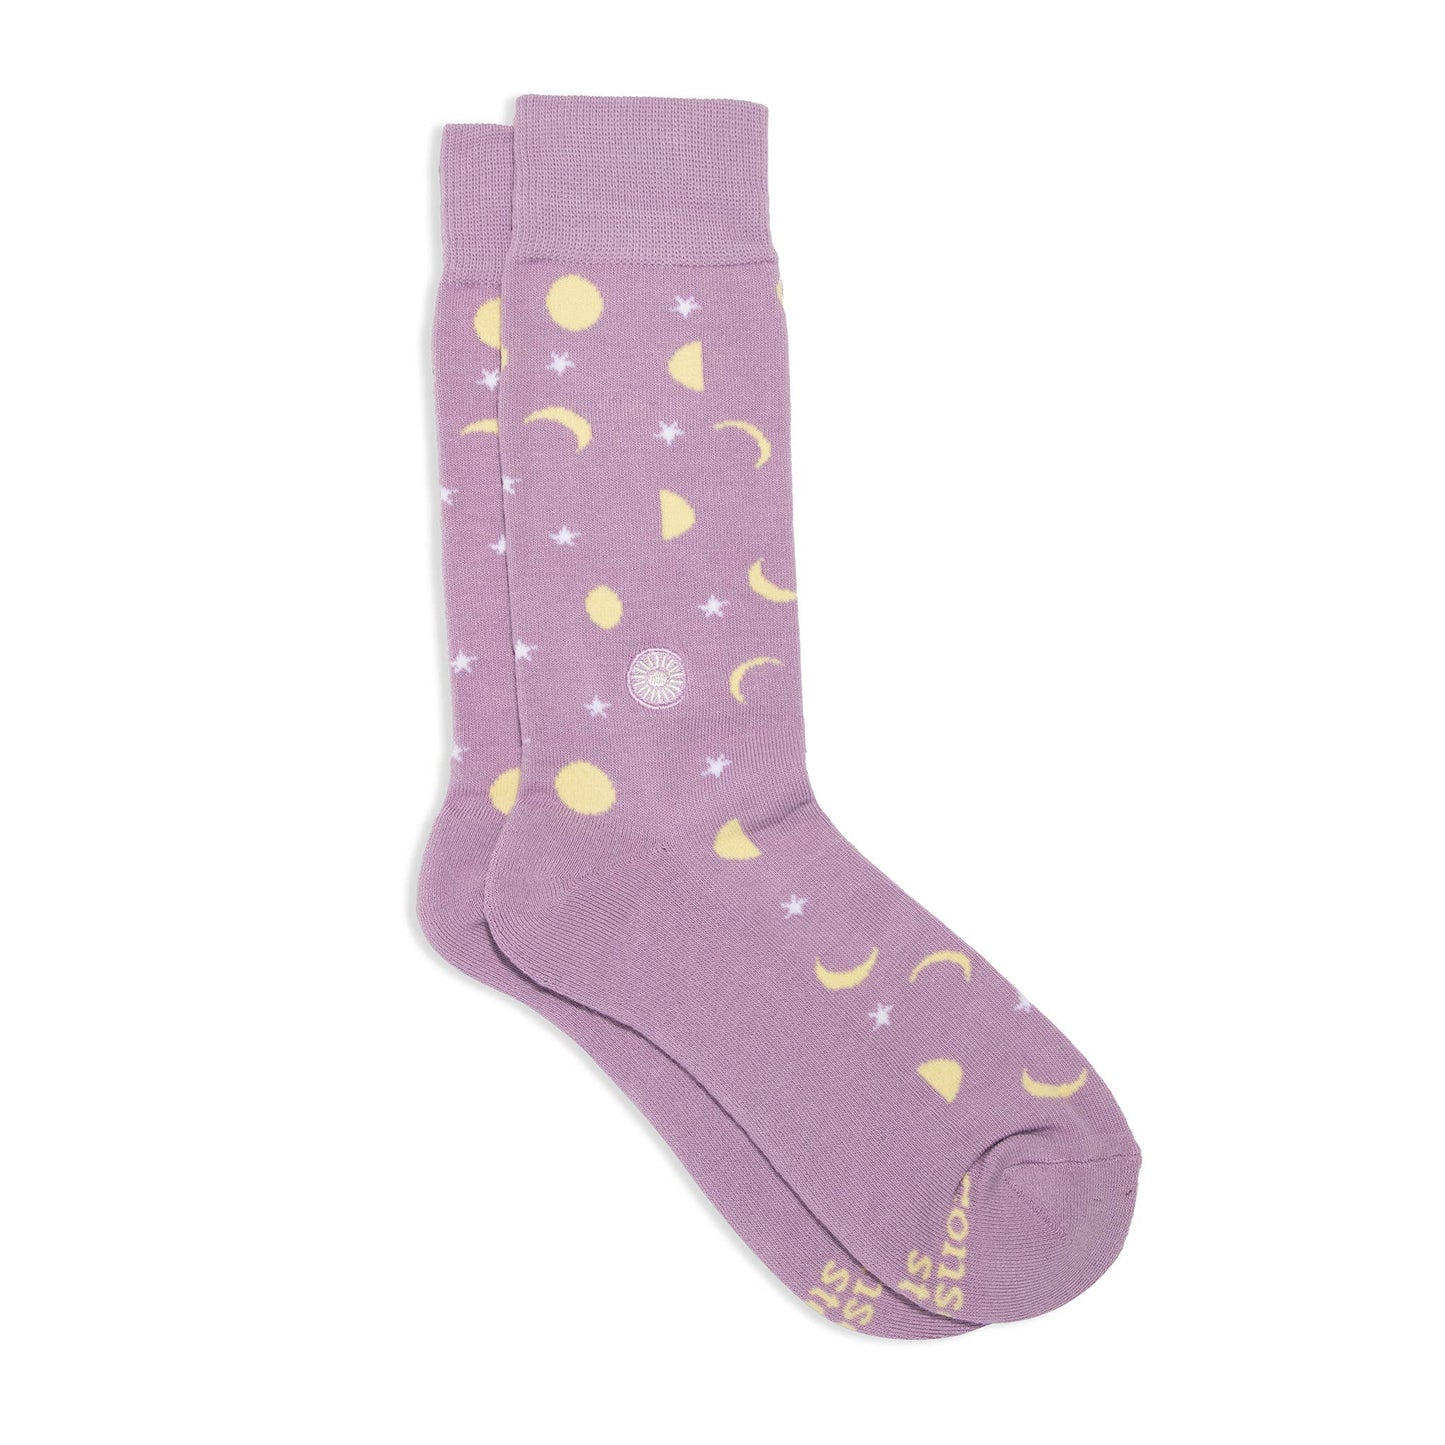 Socks that Support Mental Health (Purple Moons): Medium